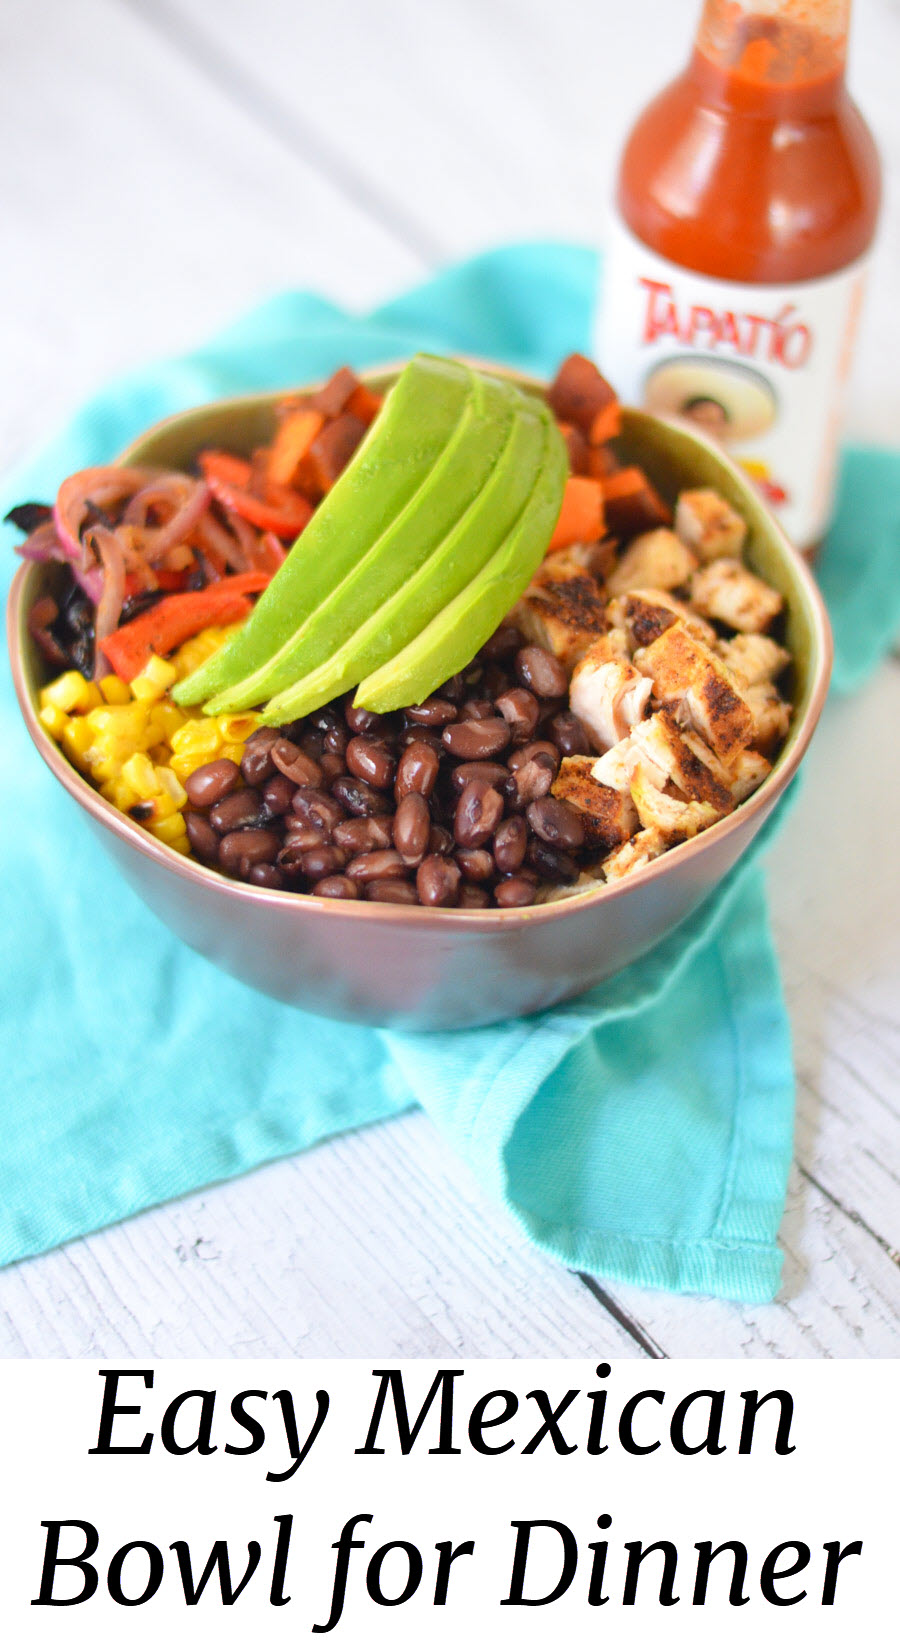 Easy Mexican Dinner Ideas. Cinco de Mayo Mexican-Inspired Balance Bowl Recipe. #mexicanfood #dinnerideas #leftovers #dinner #weeknightdinner #lmrecipes #foodblog #foodblogger